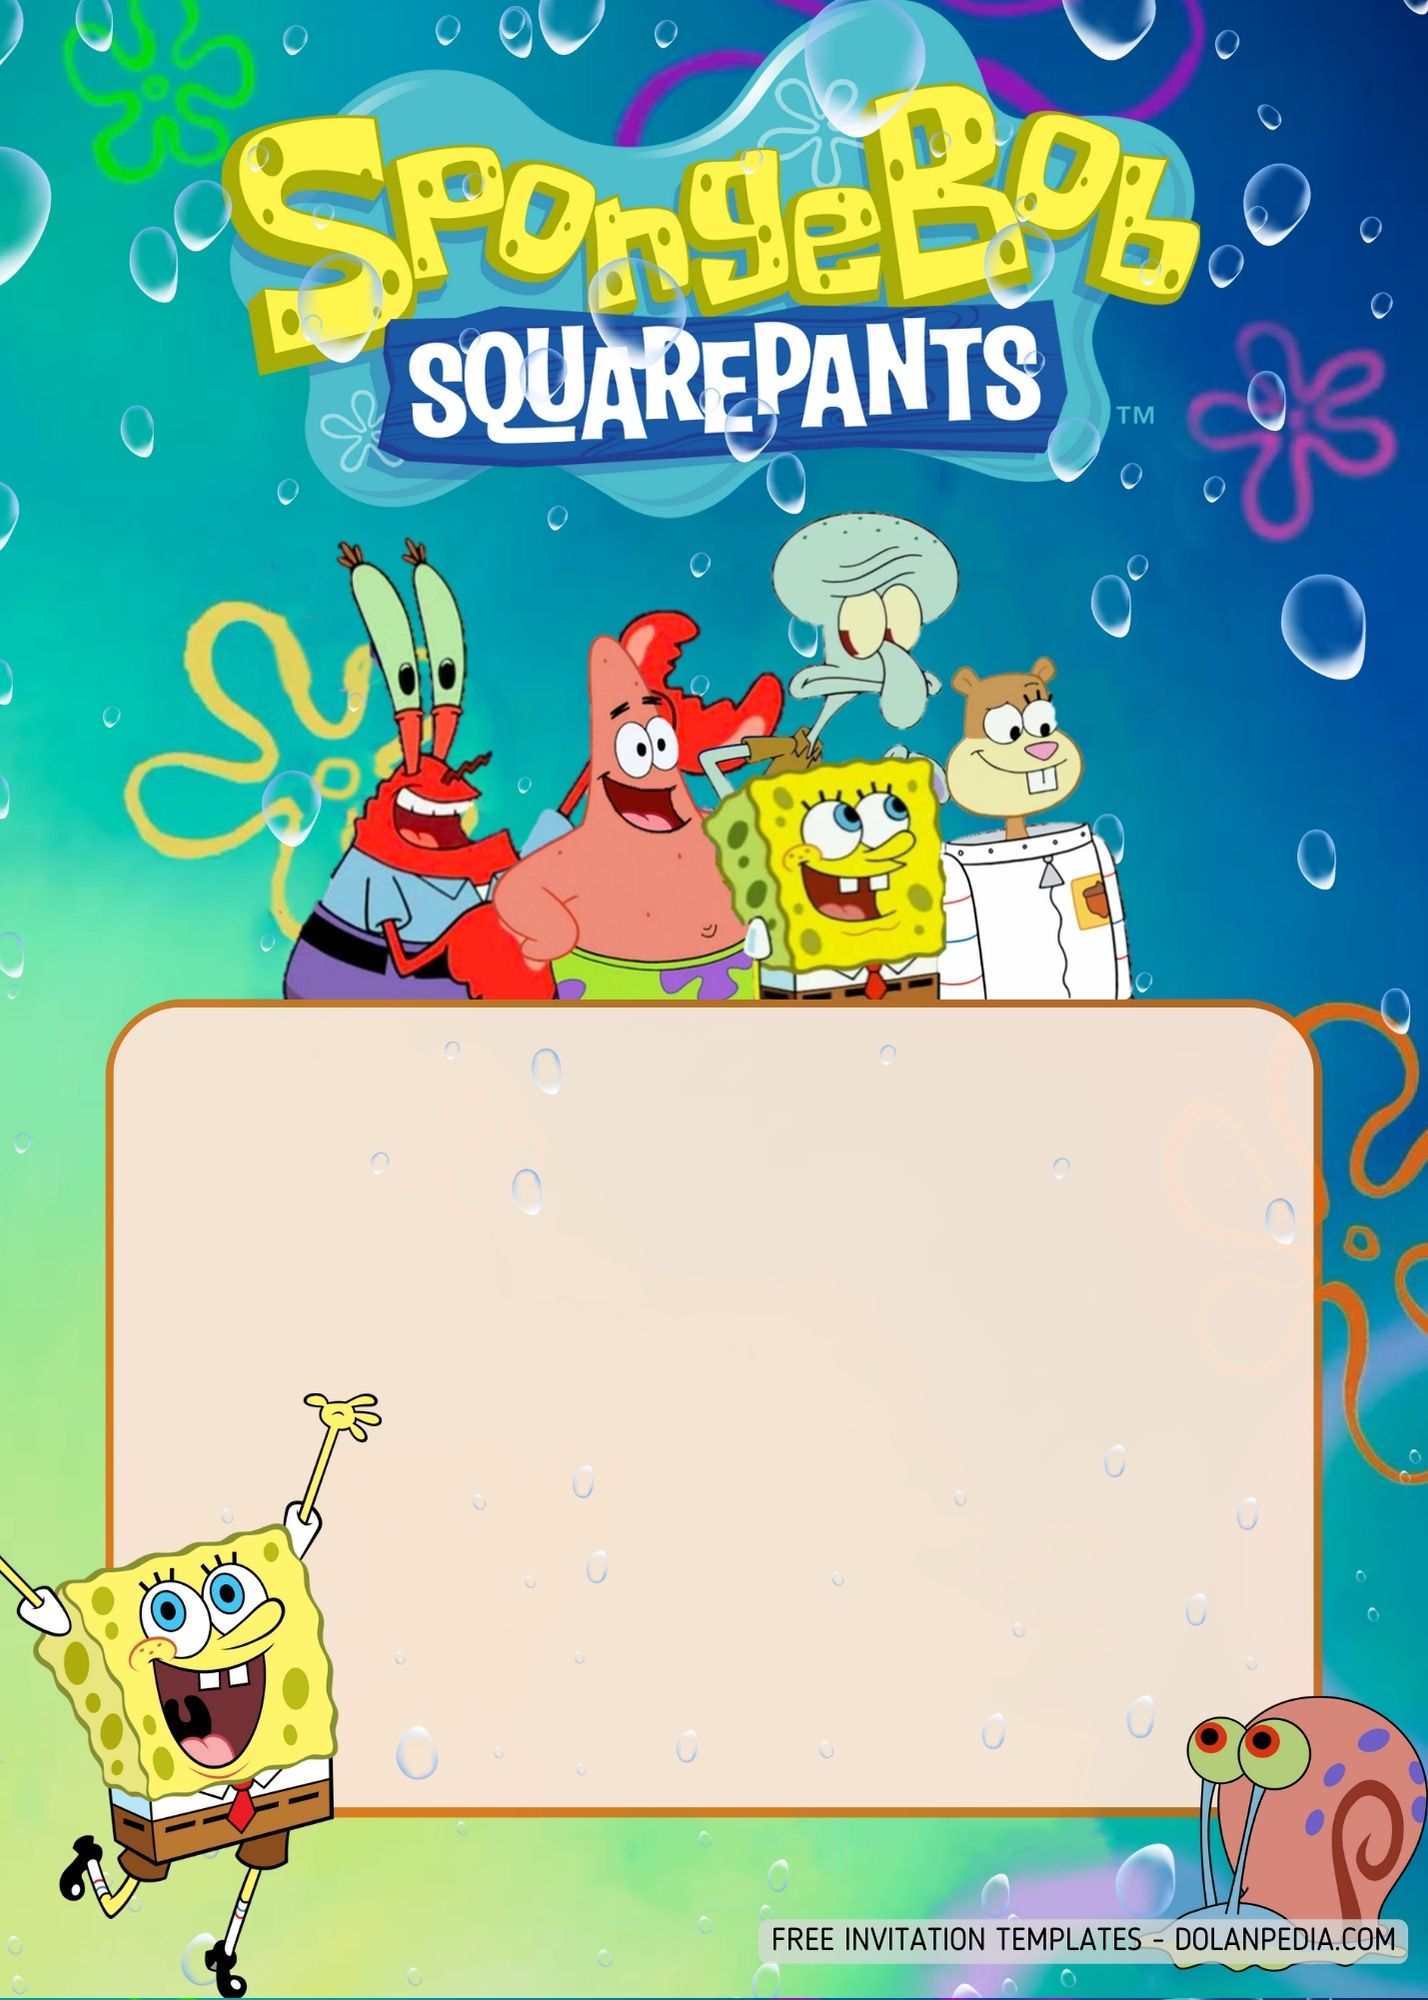 FREE Spongebob Squarepants Invitation Templates